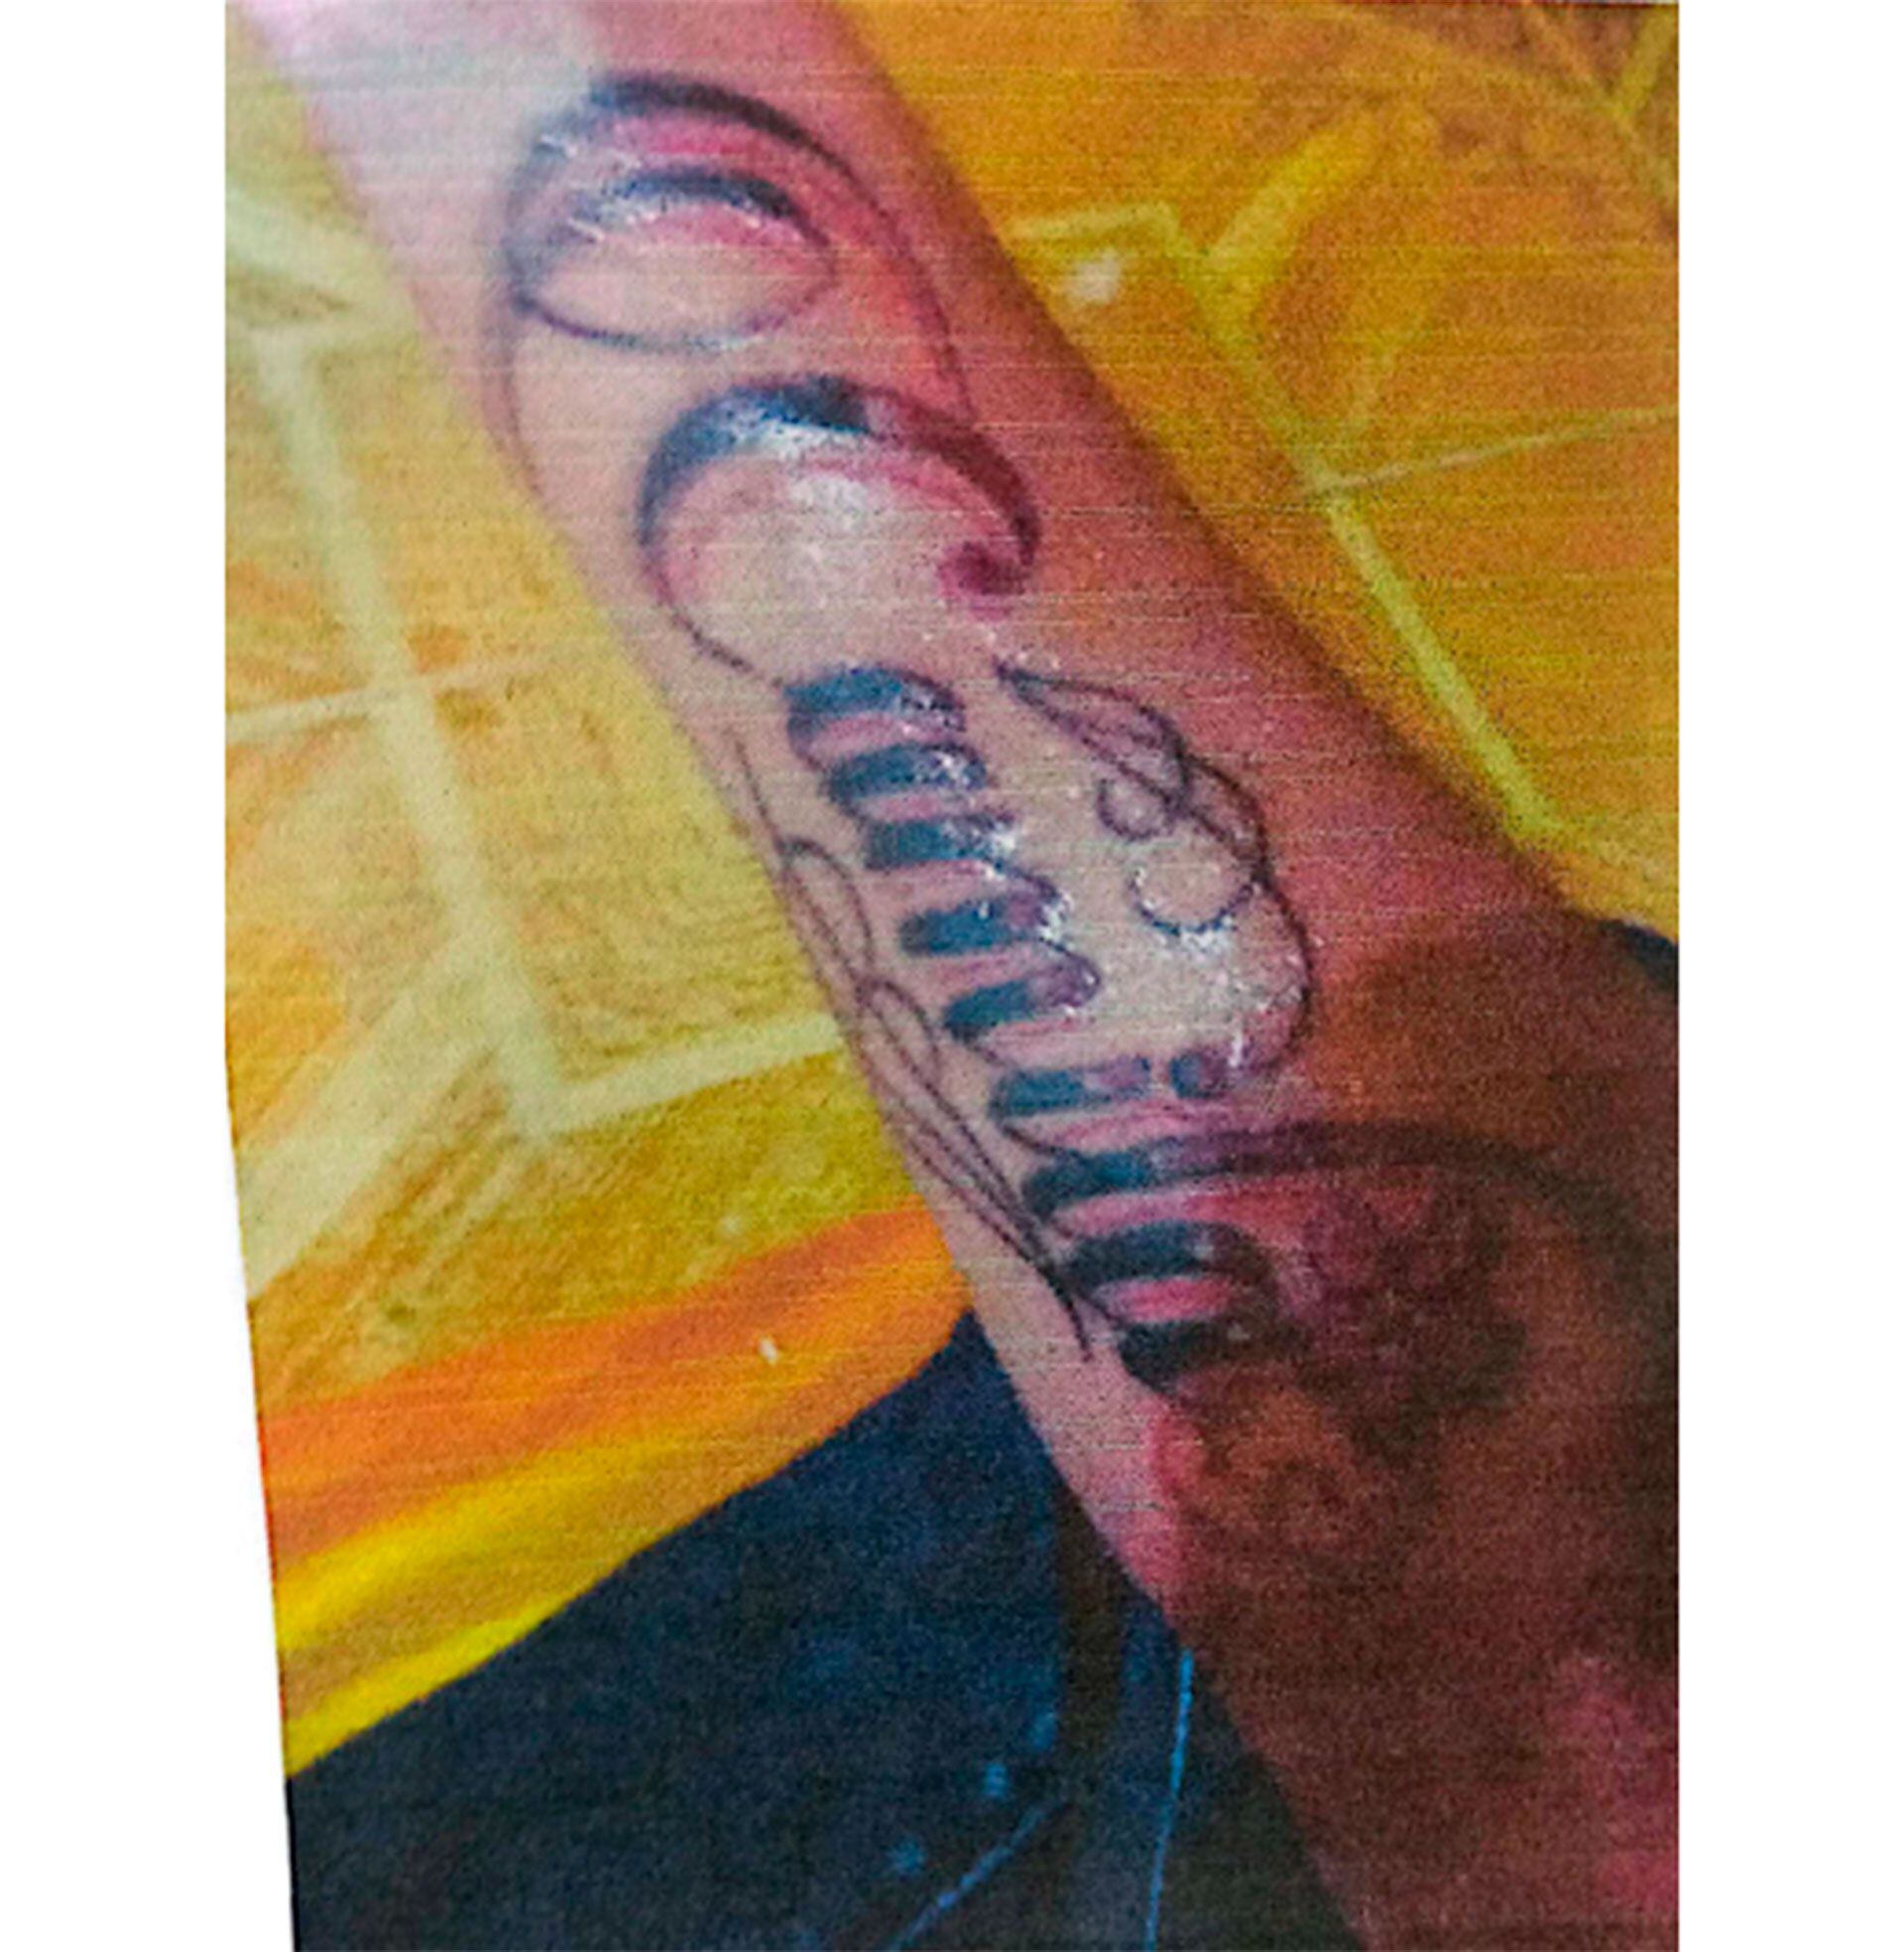 El tatuaje en el brazo del joven venezolano